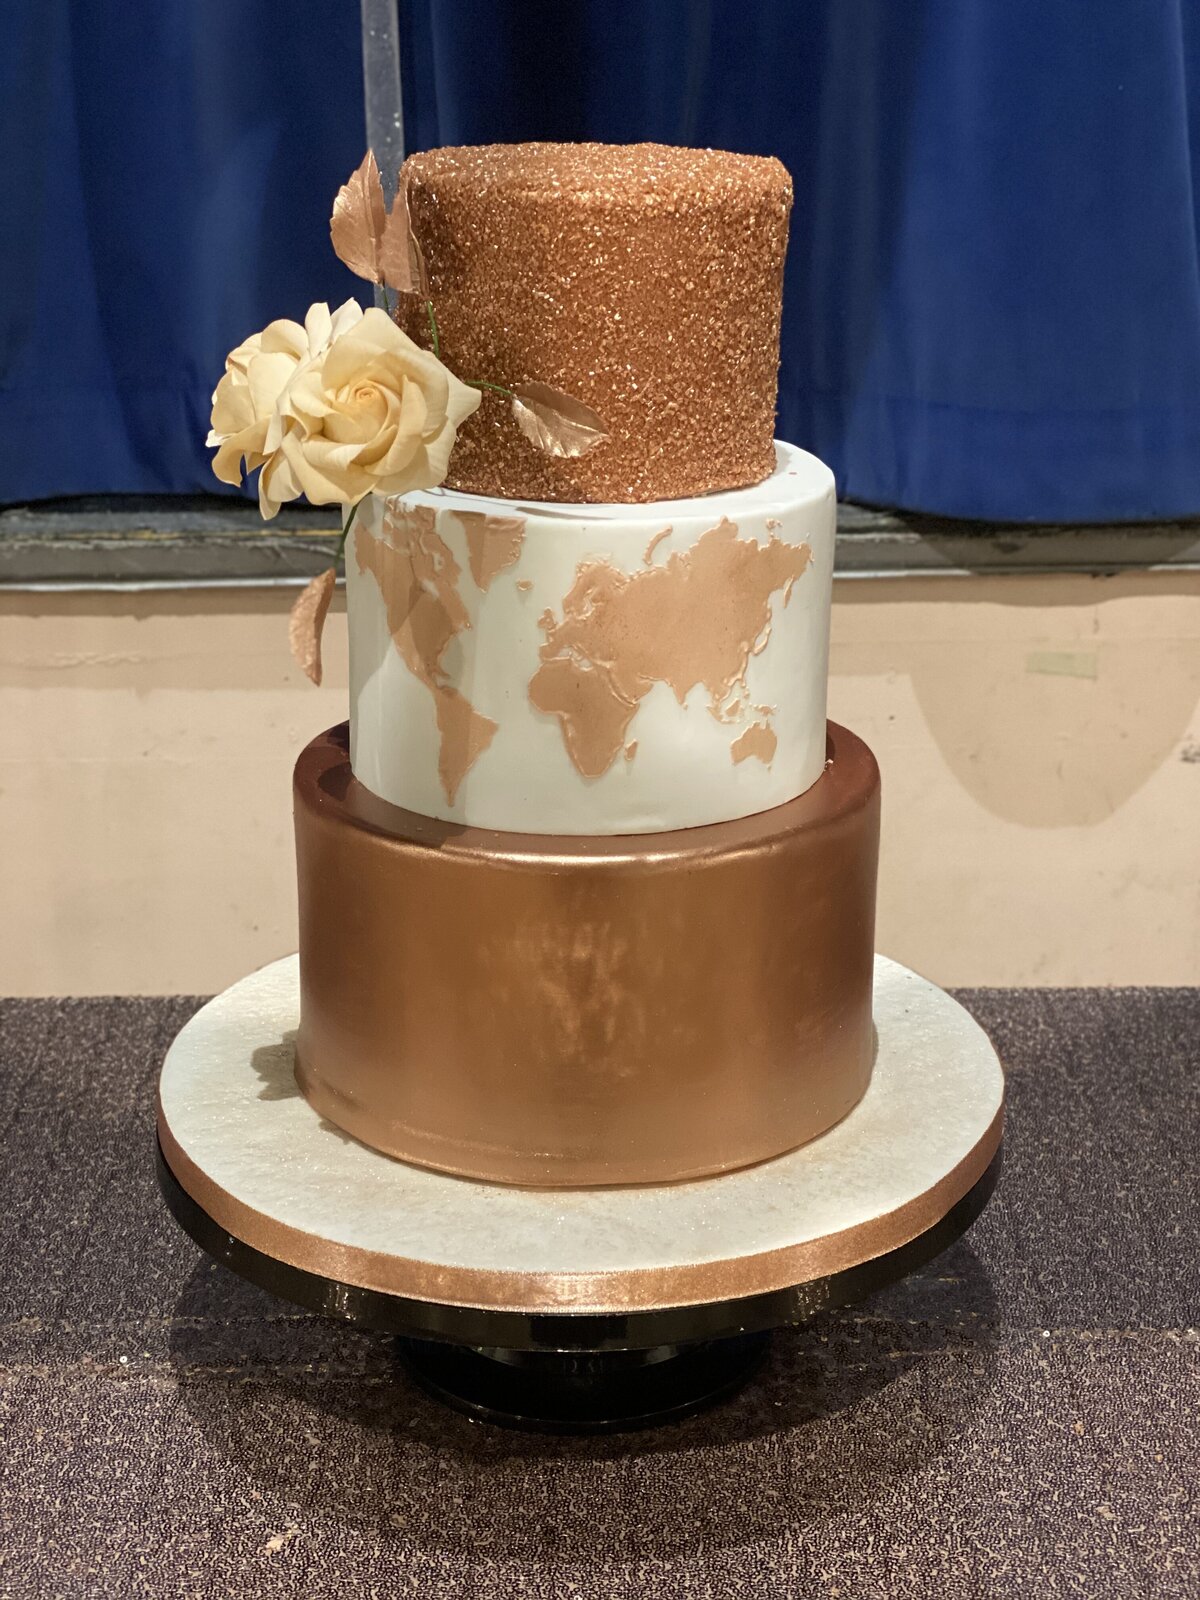 Rose gold birthday cake